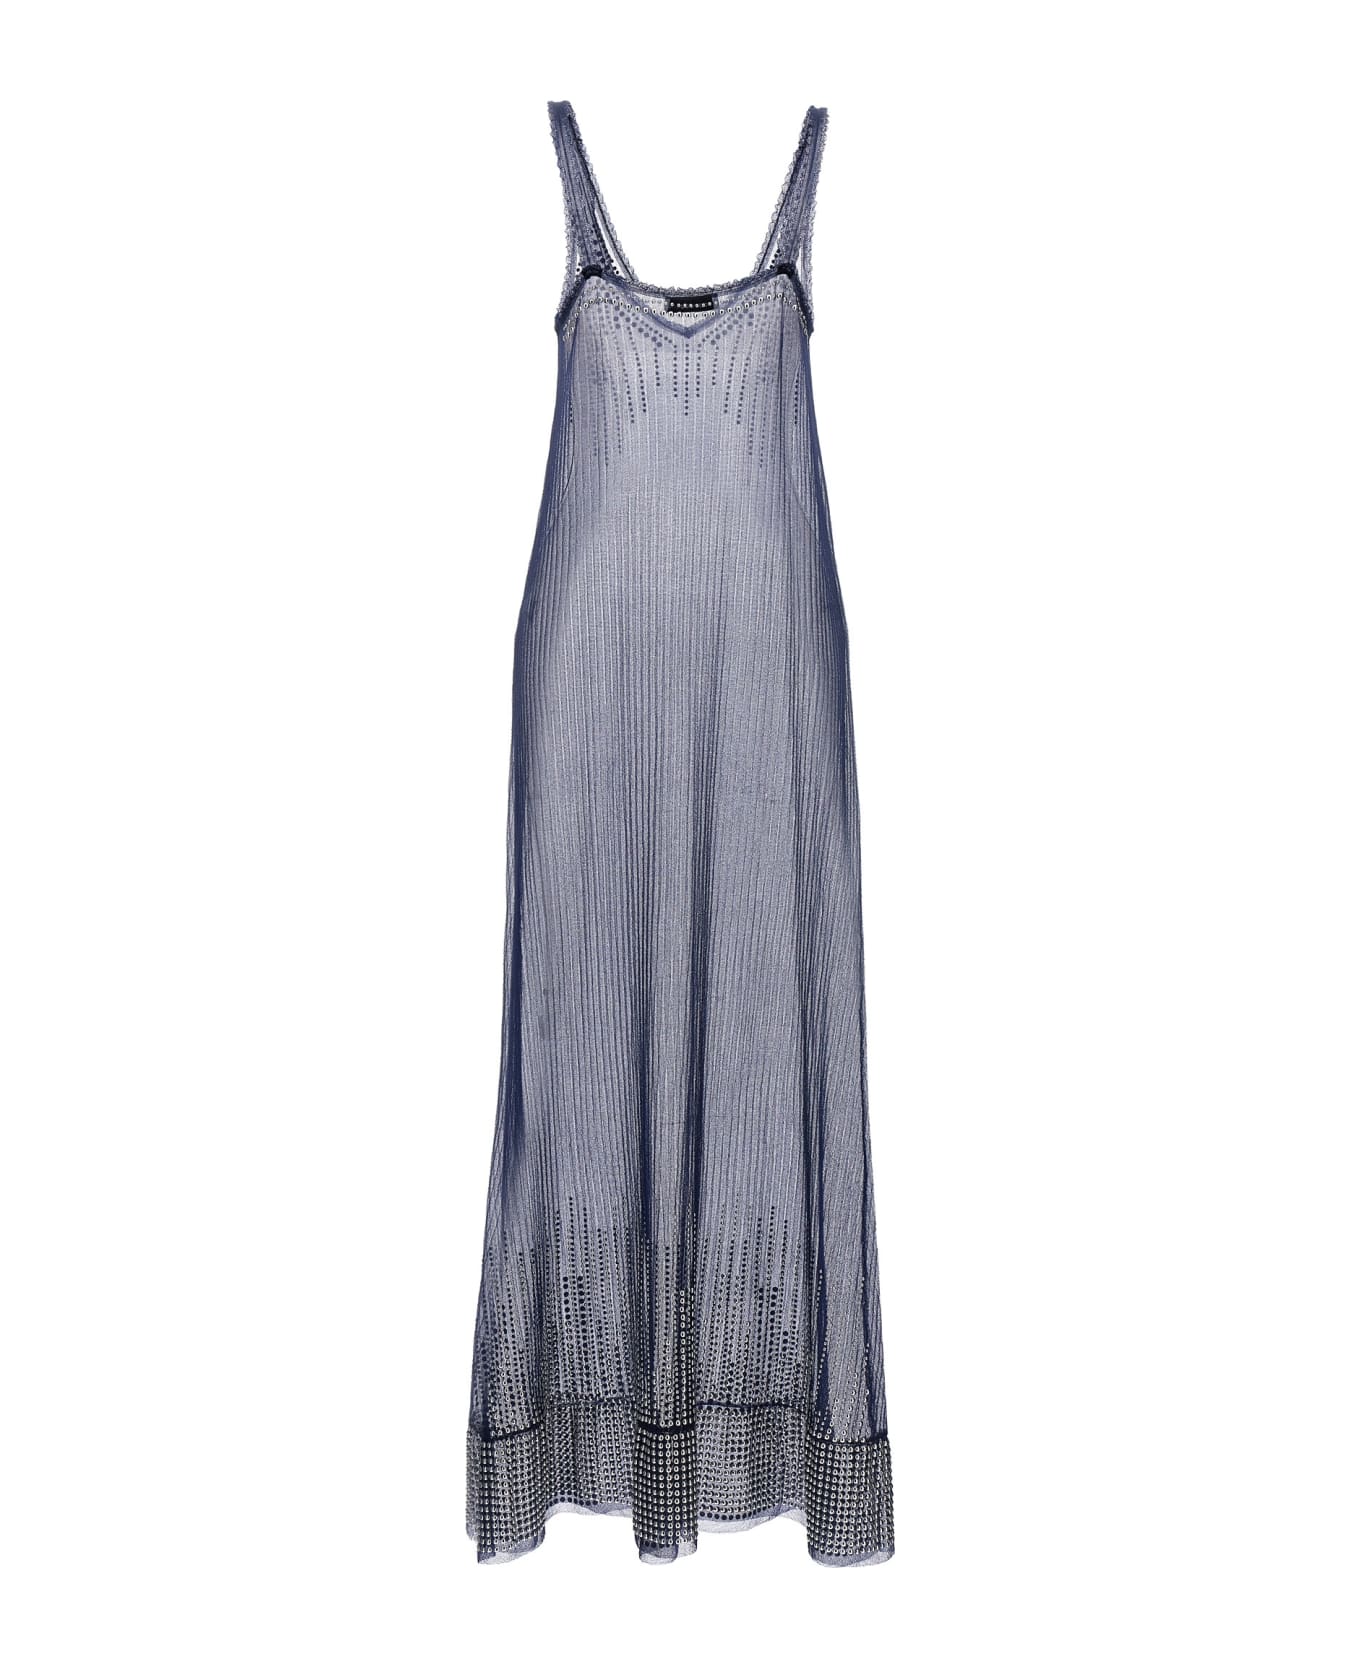 Paco Rabanne Studded Mesh Dress - Blue